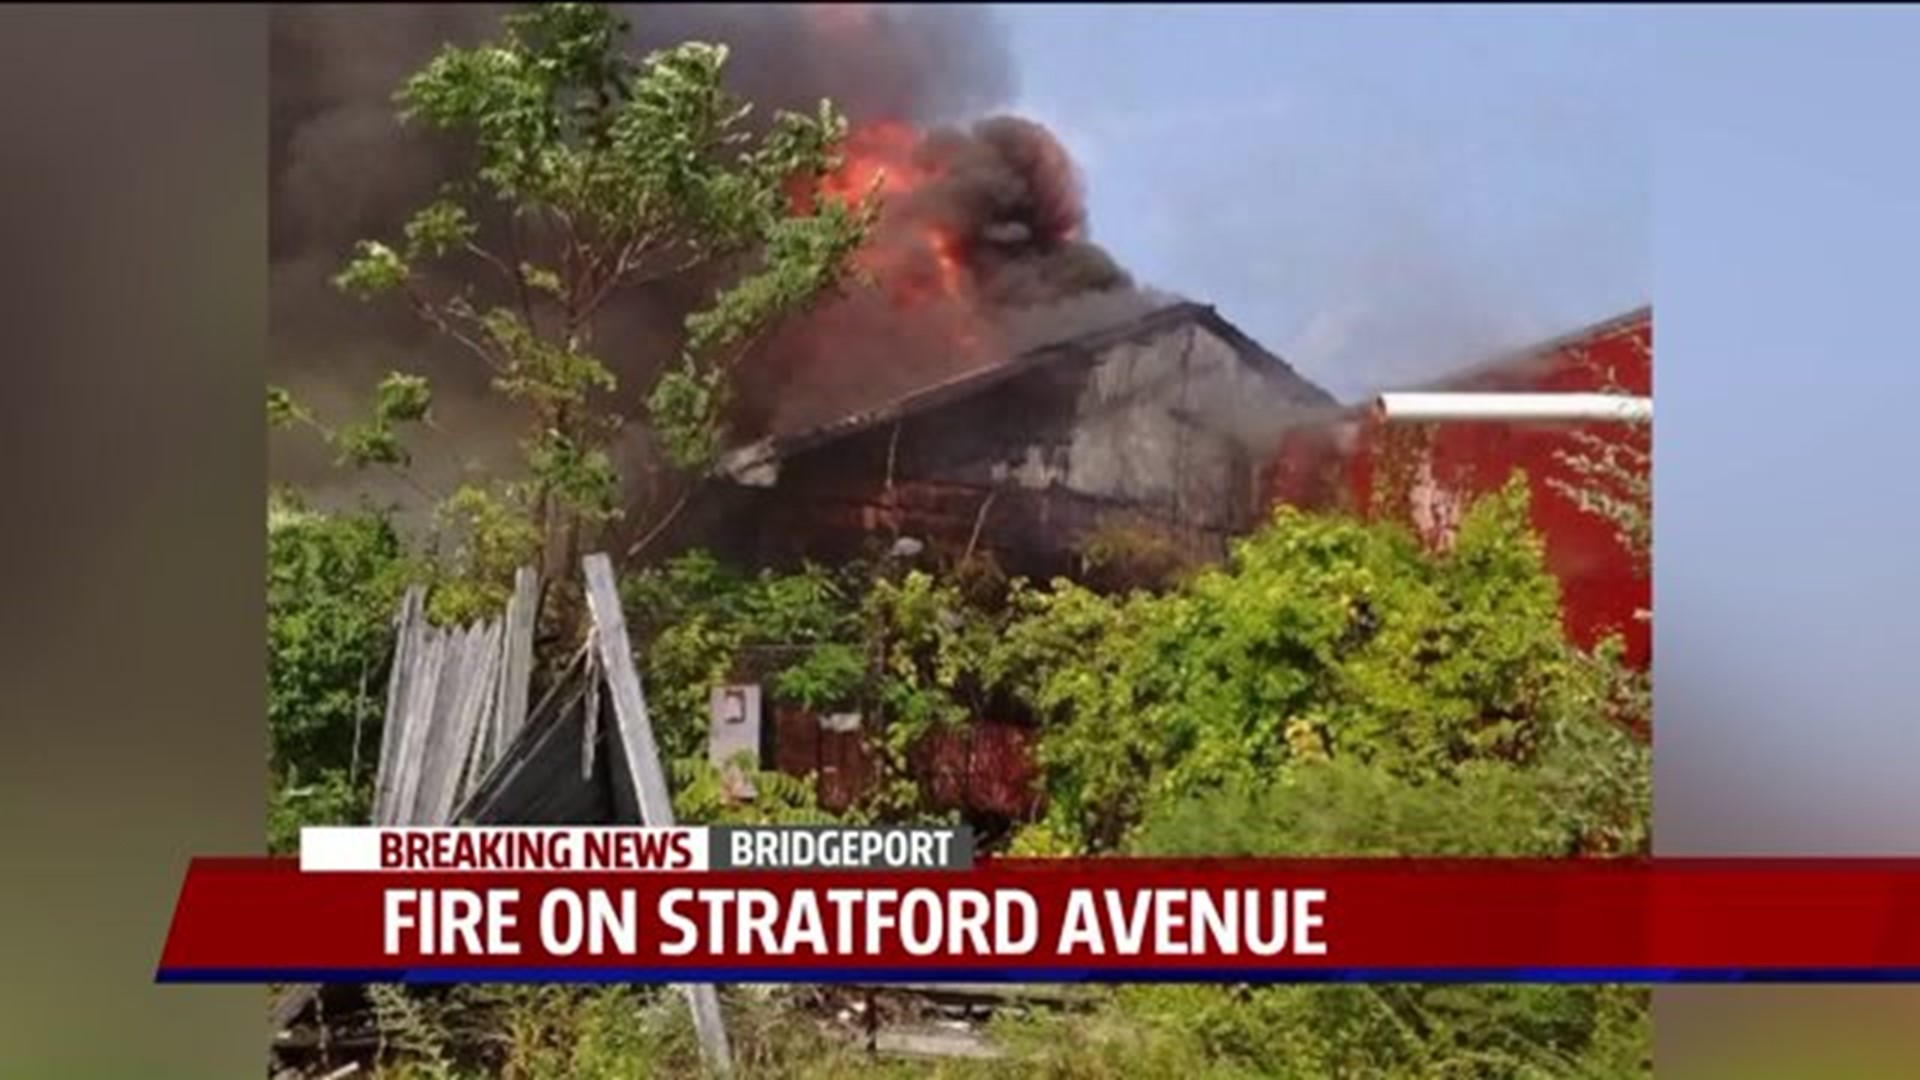 Fire on Stratford Avenue in Bridgeport